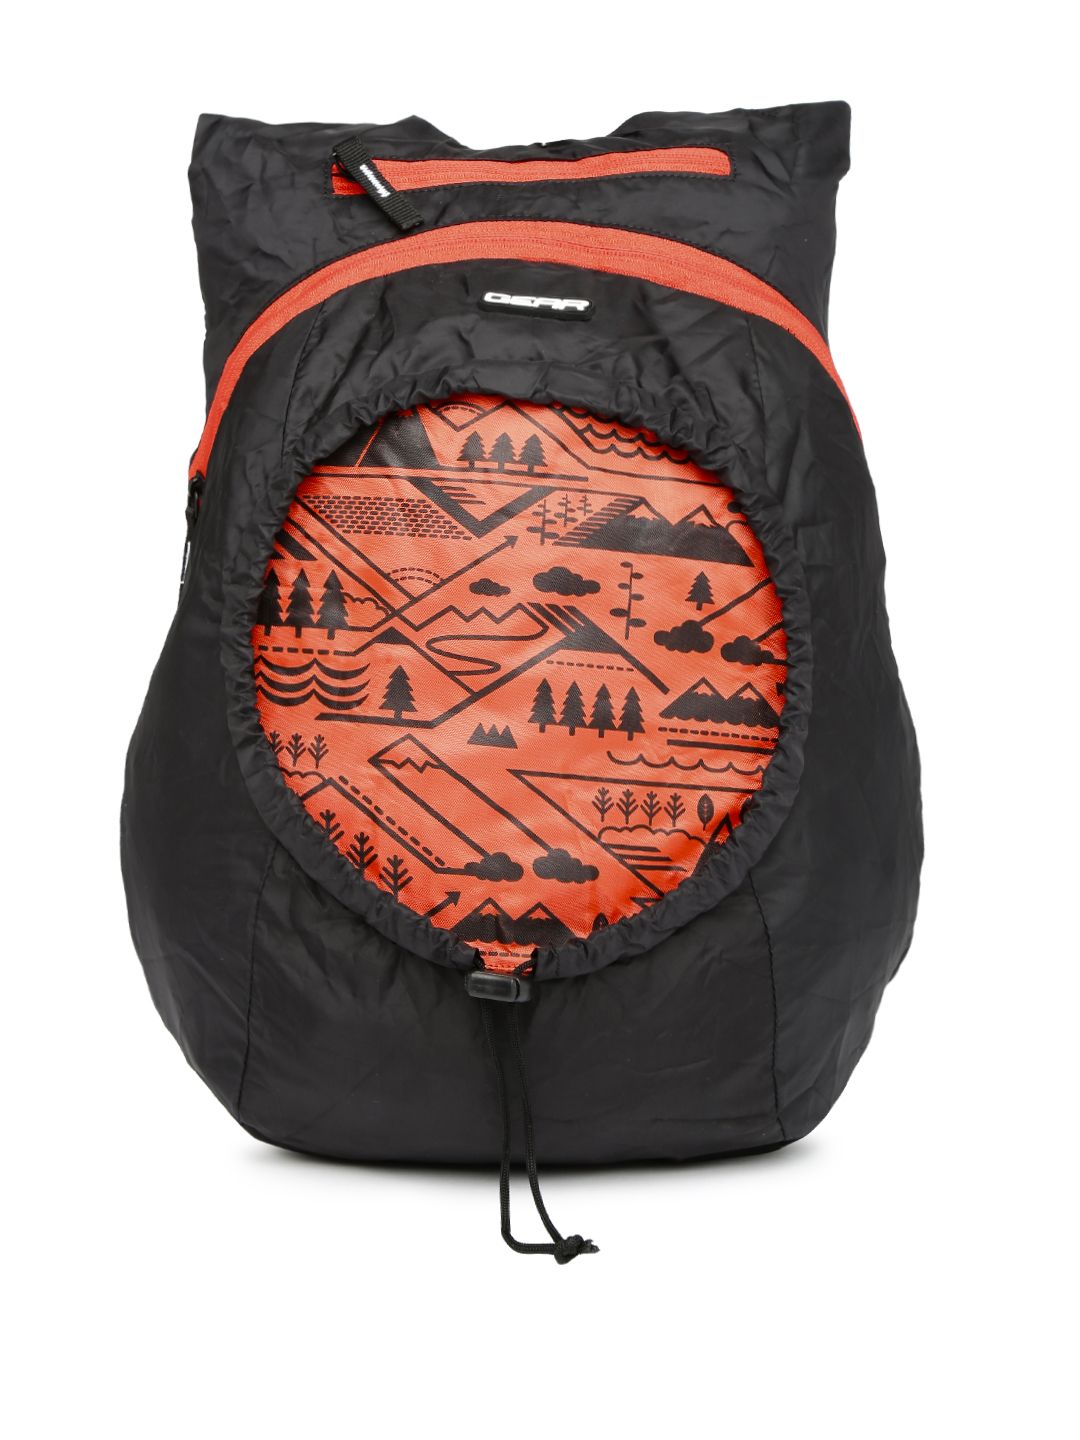 Gear Unisex Black & Orange Foldable Backpack Price in India